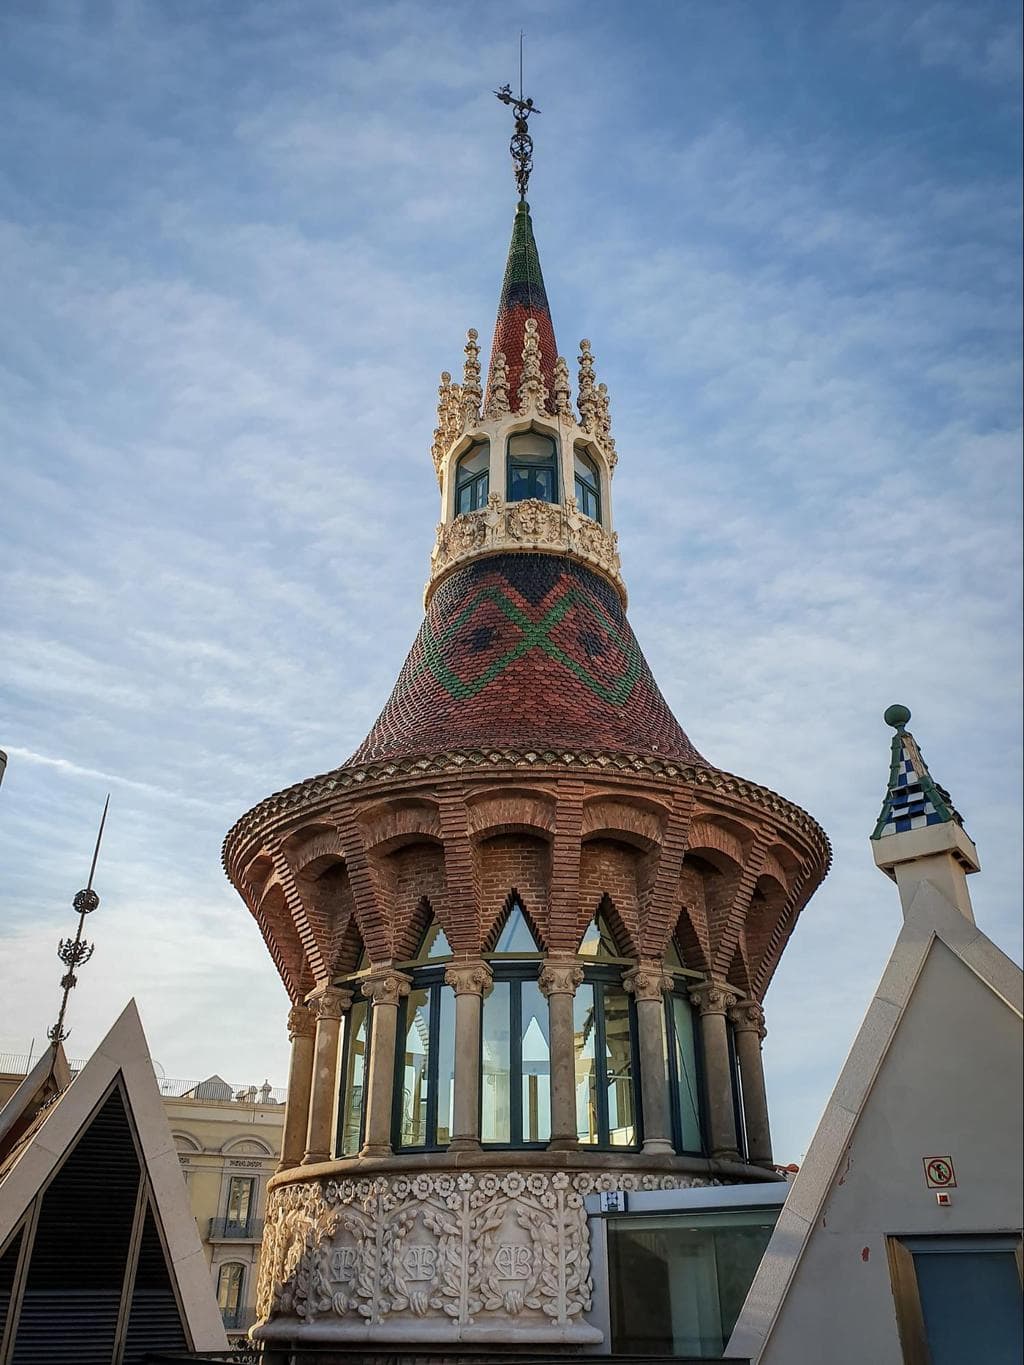 The towers of La Casa de les Punxes exterior